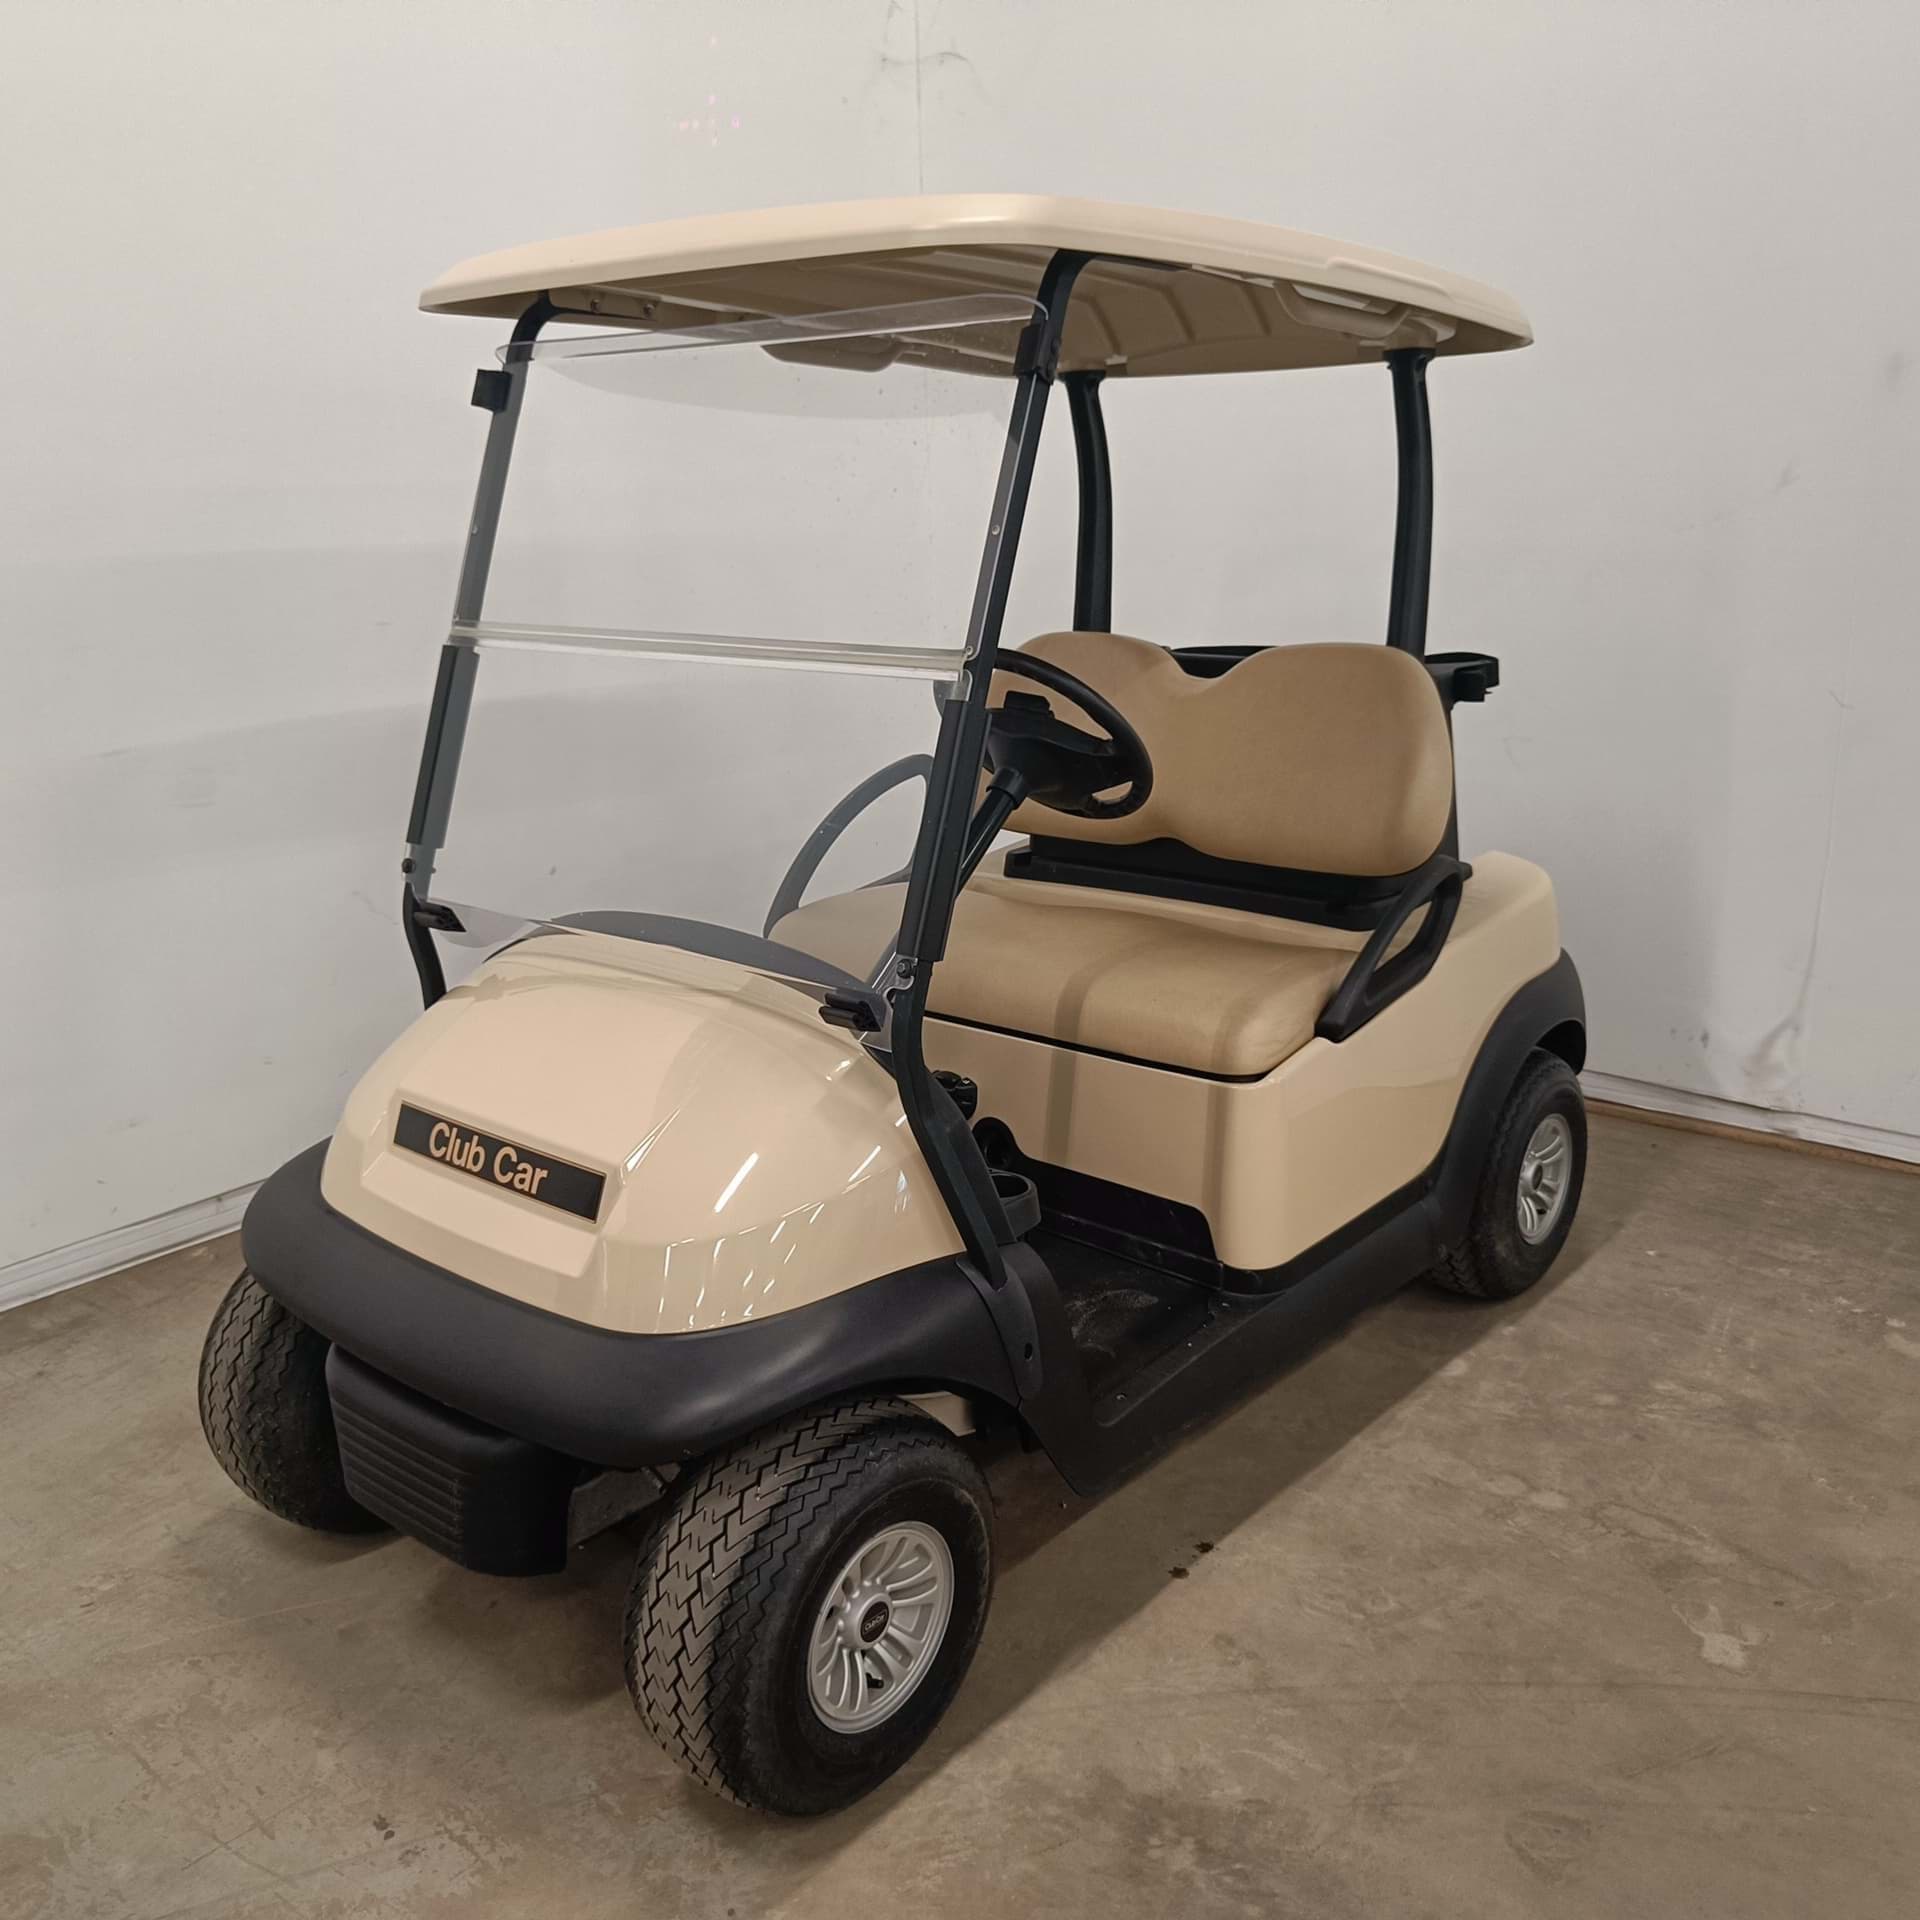 Picture of Trade - 2019- Electric - Club Car - Precedent - 2 seater - Beige